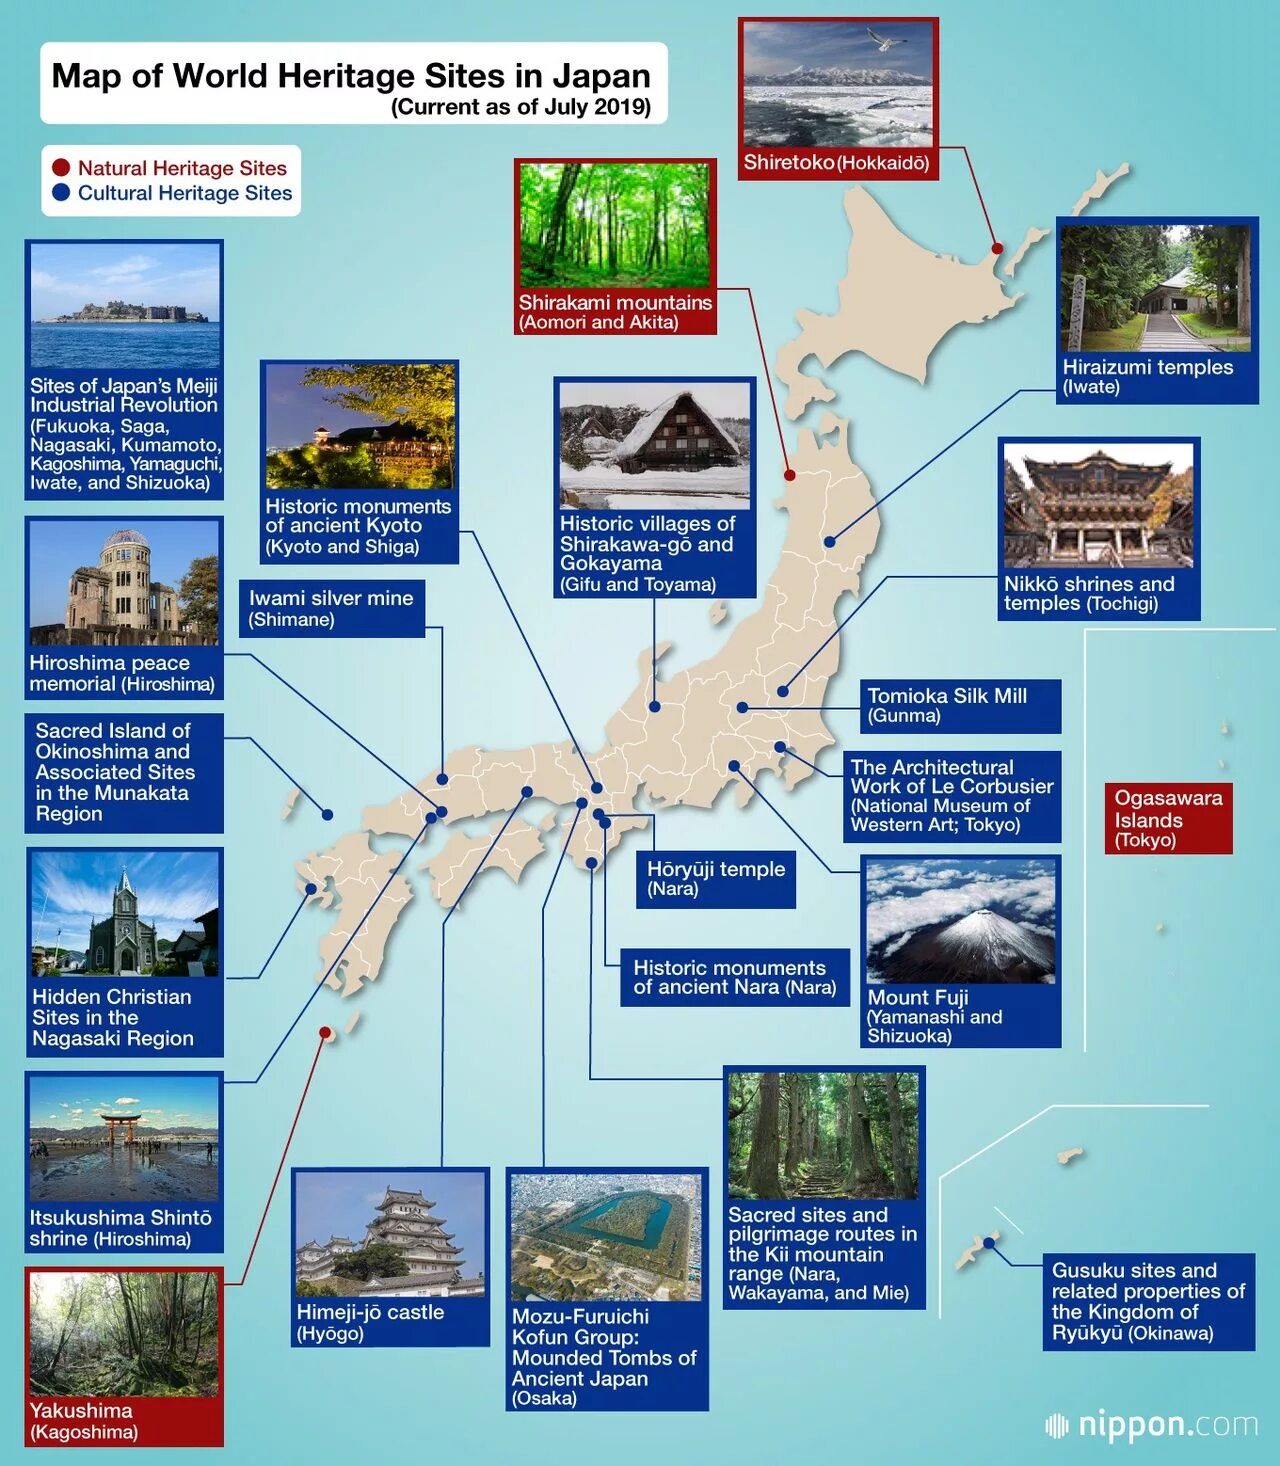 Shrine перевод. Таблица ЮНЕСКО В Японии. Sacred Island of Okinoshima and associated sites in the Munakata Region. Munakata Region Japan.